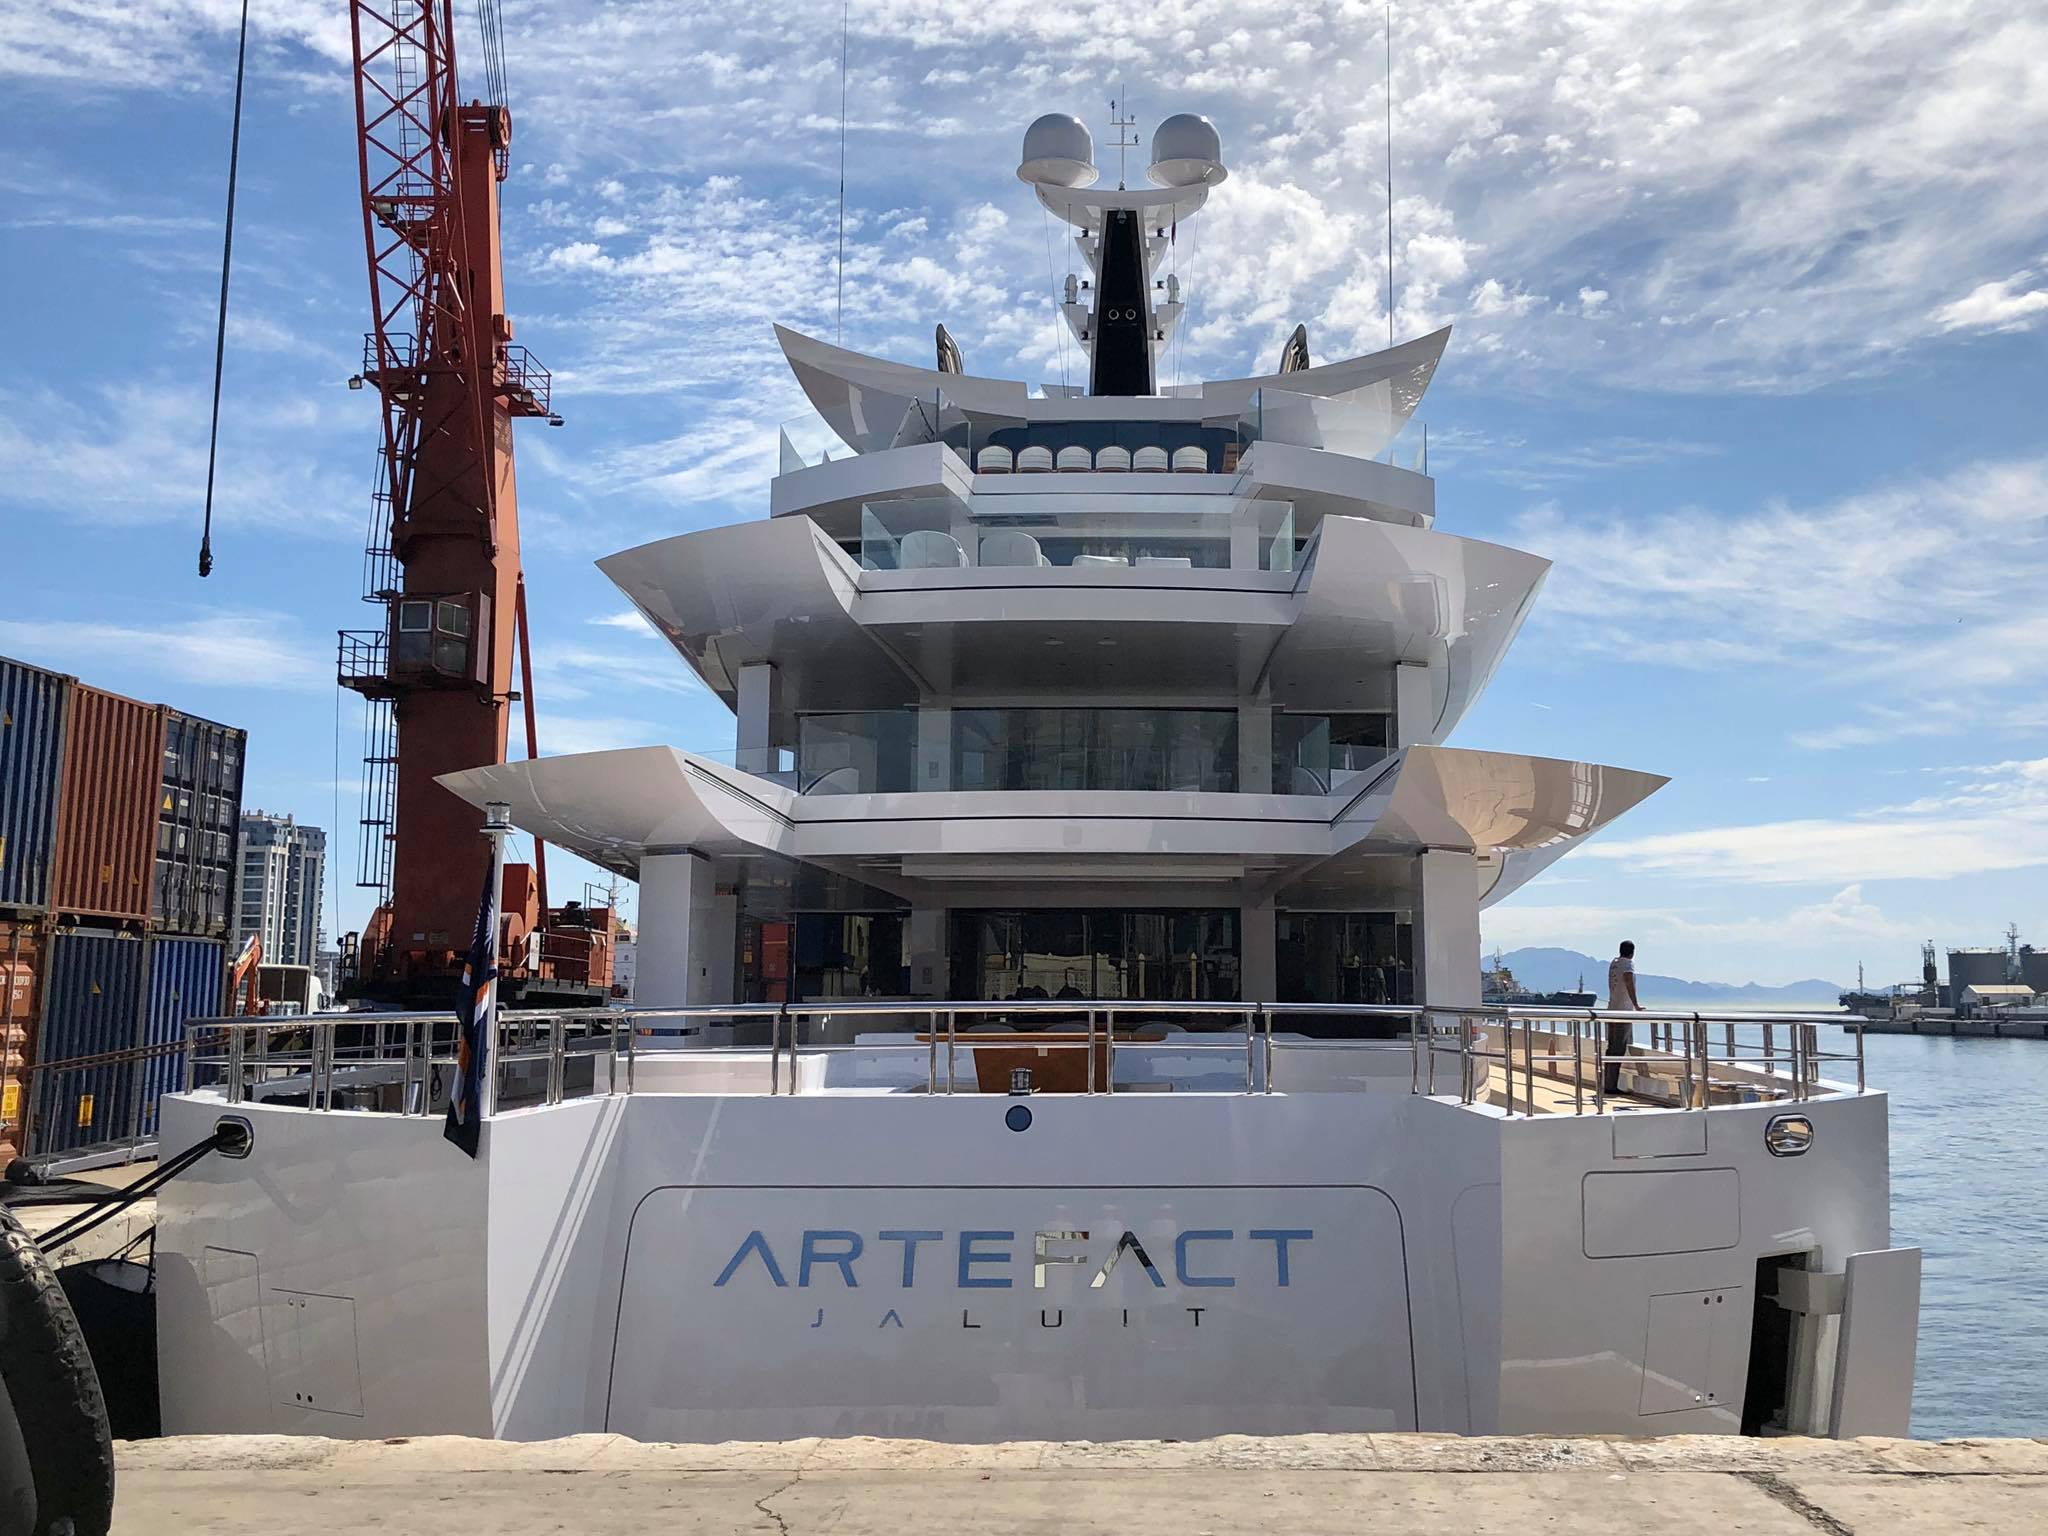 ARTEFACT Yacht • Nobskrug • 2020 • owner Mike Lazaridis